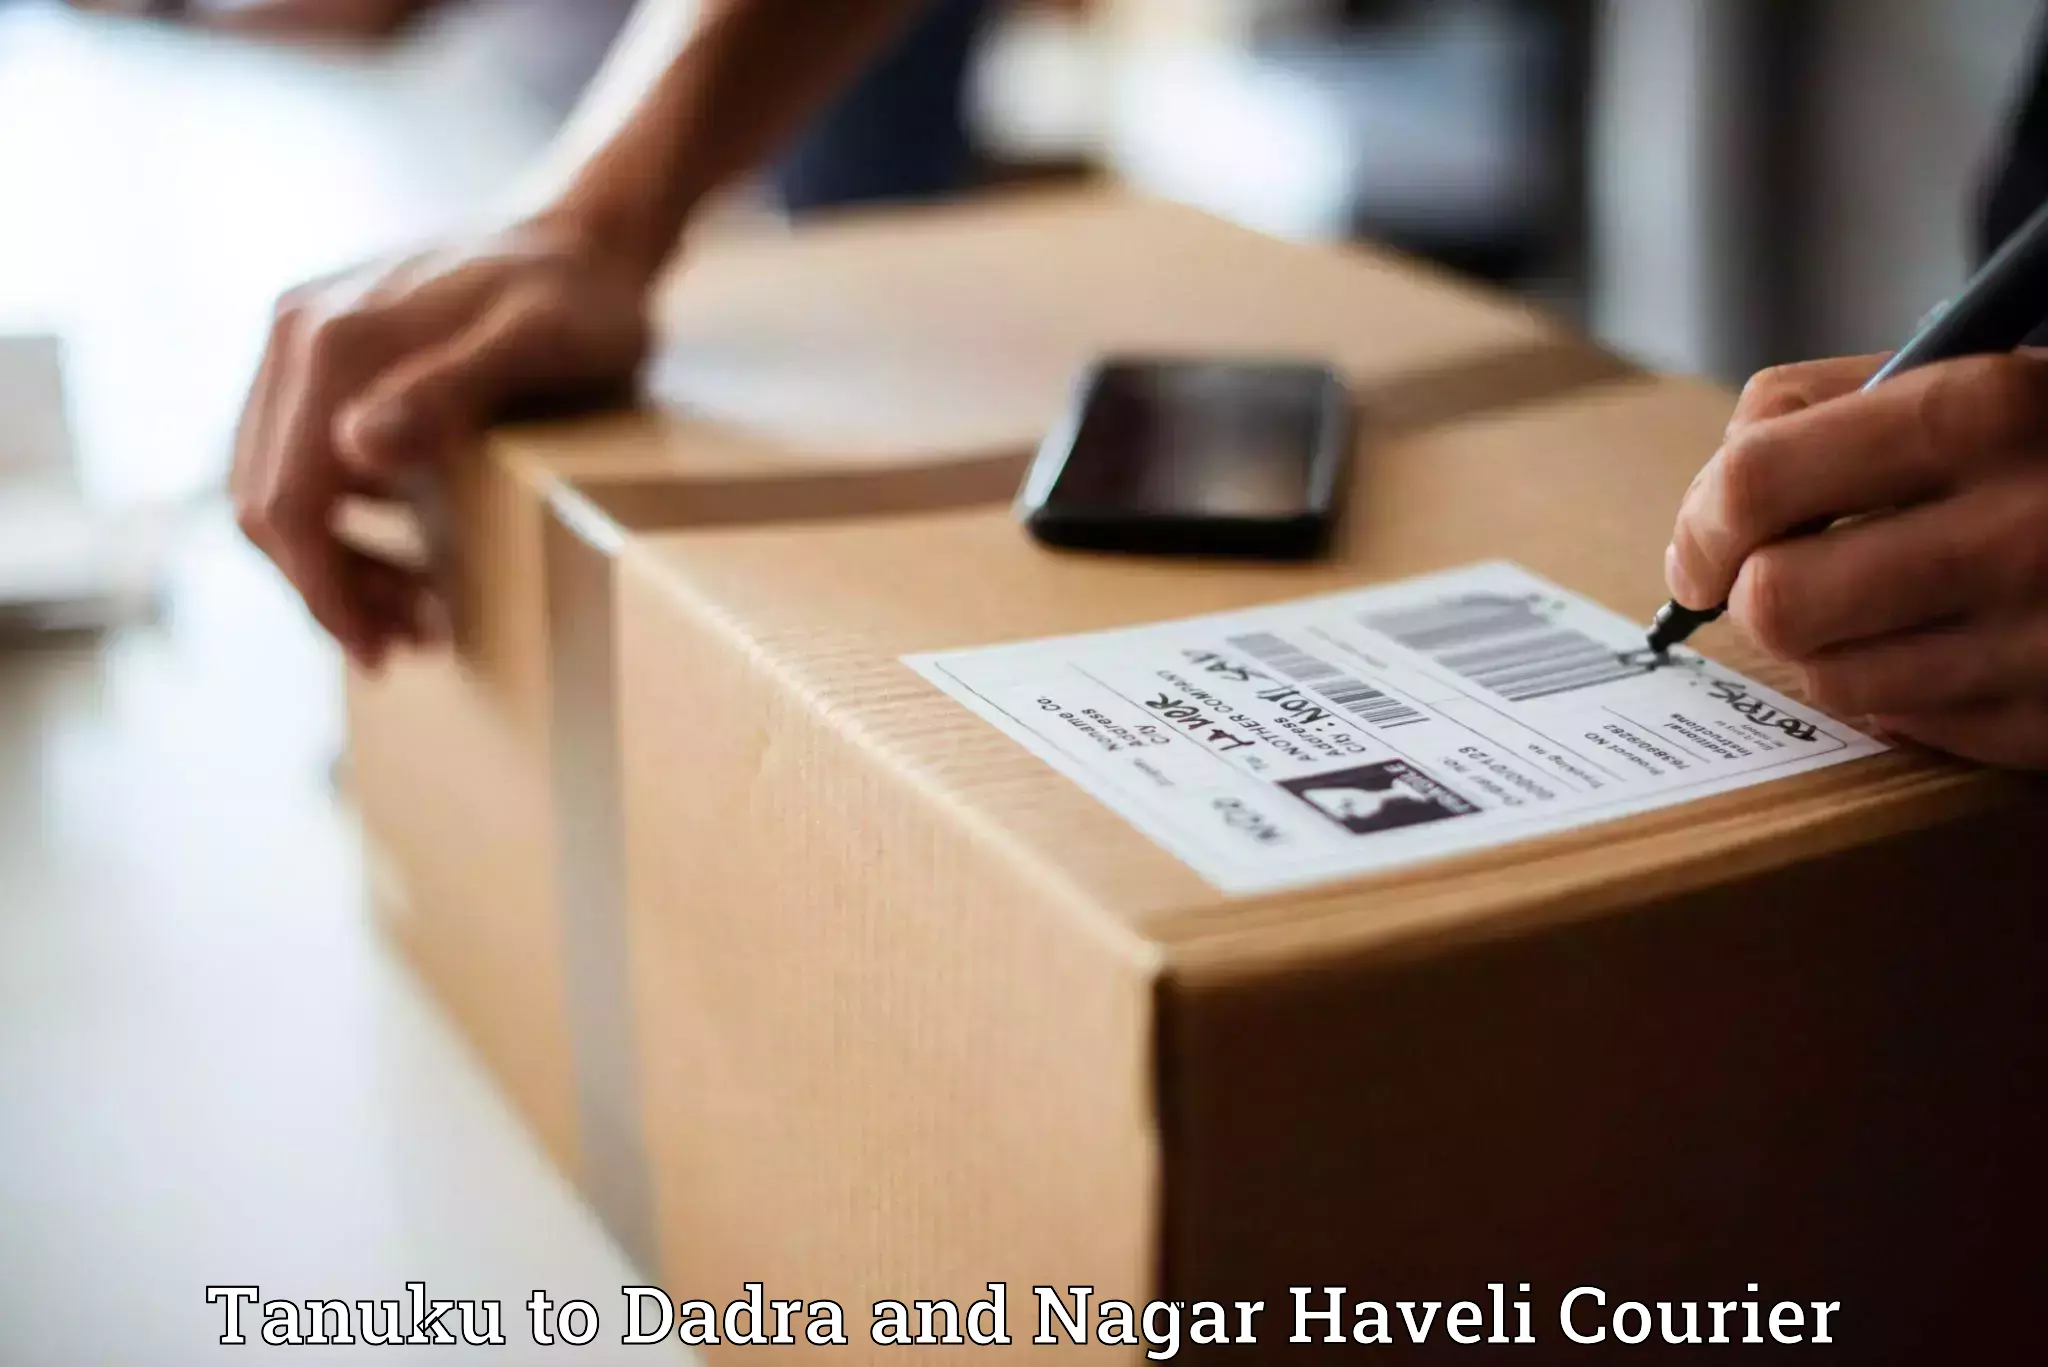 Efficient cargo handling Tanuku to Dadra and Nagar Haveli